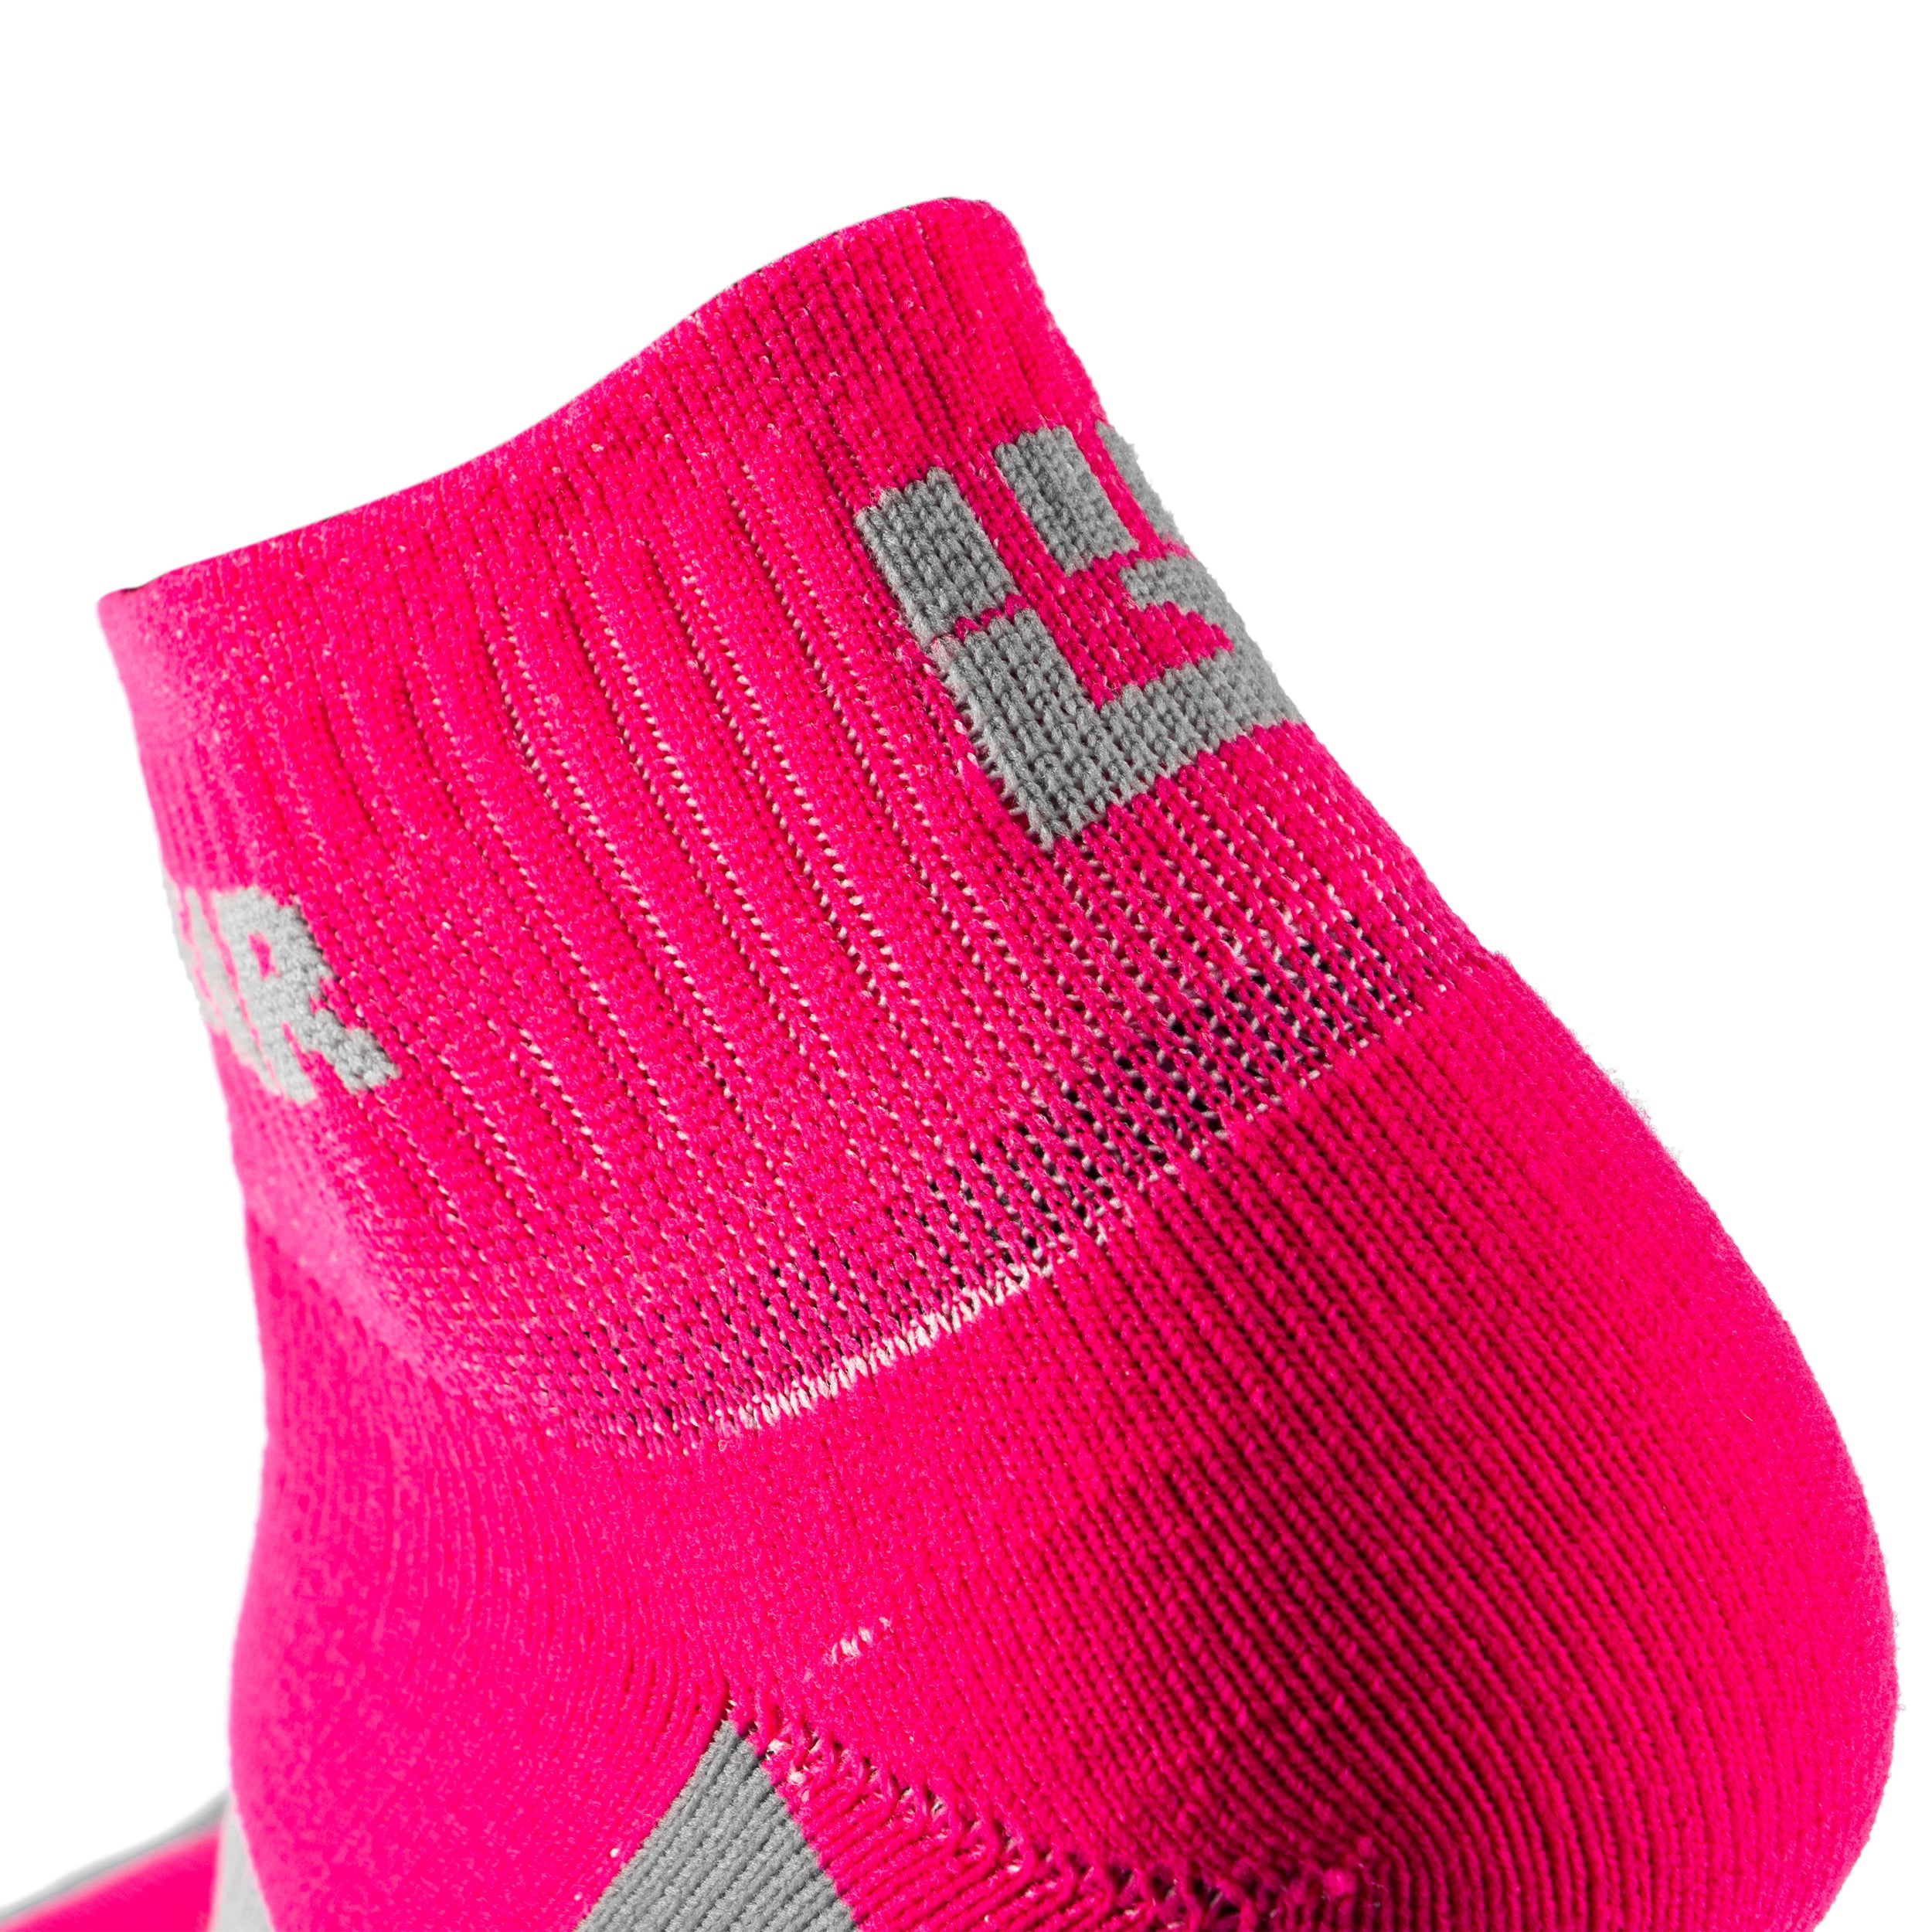 MudGear Quarter (?) Crew Socks - Pink/Gray (2 pair pack)